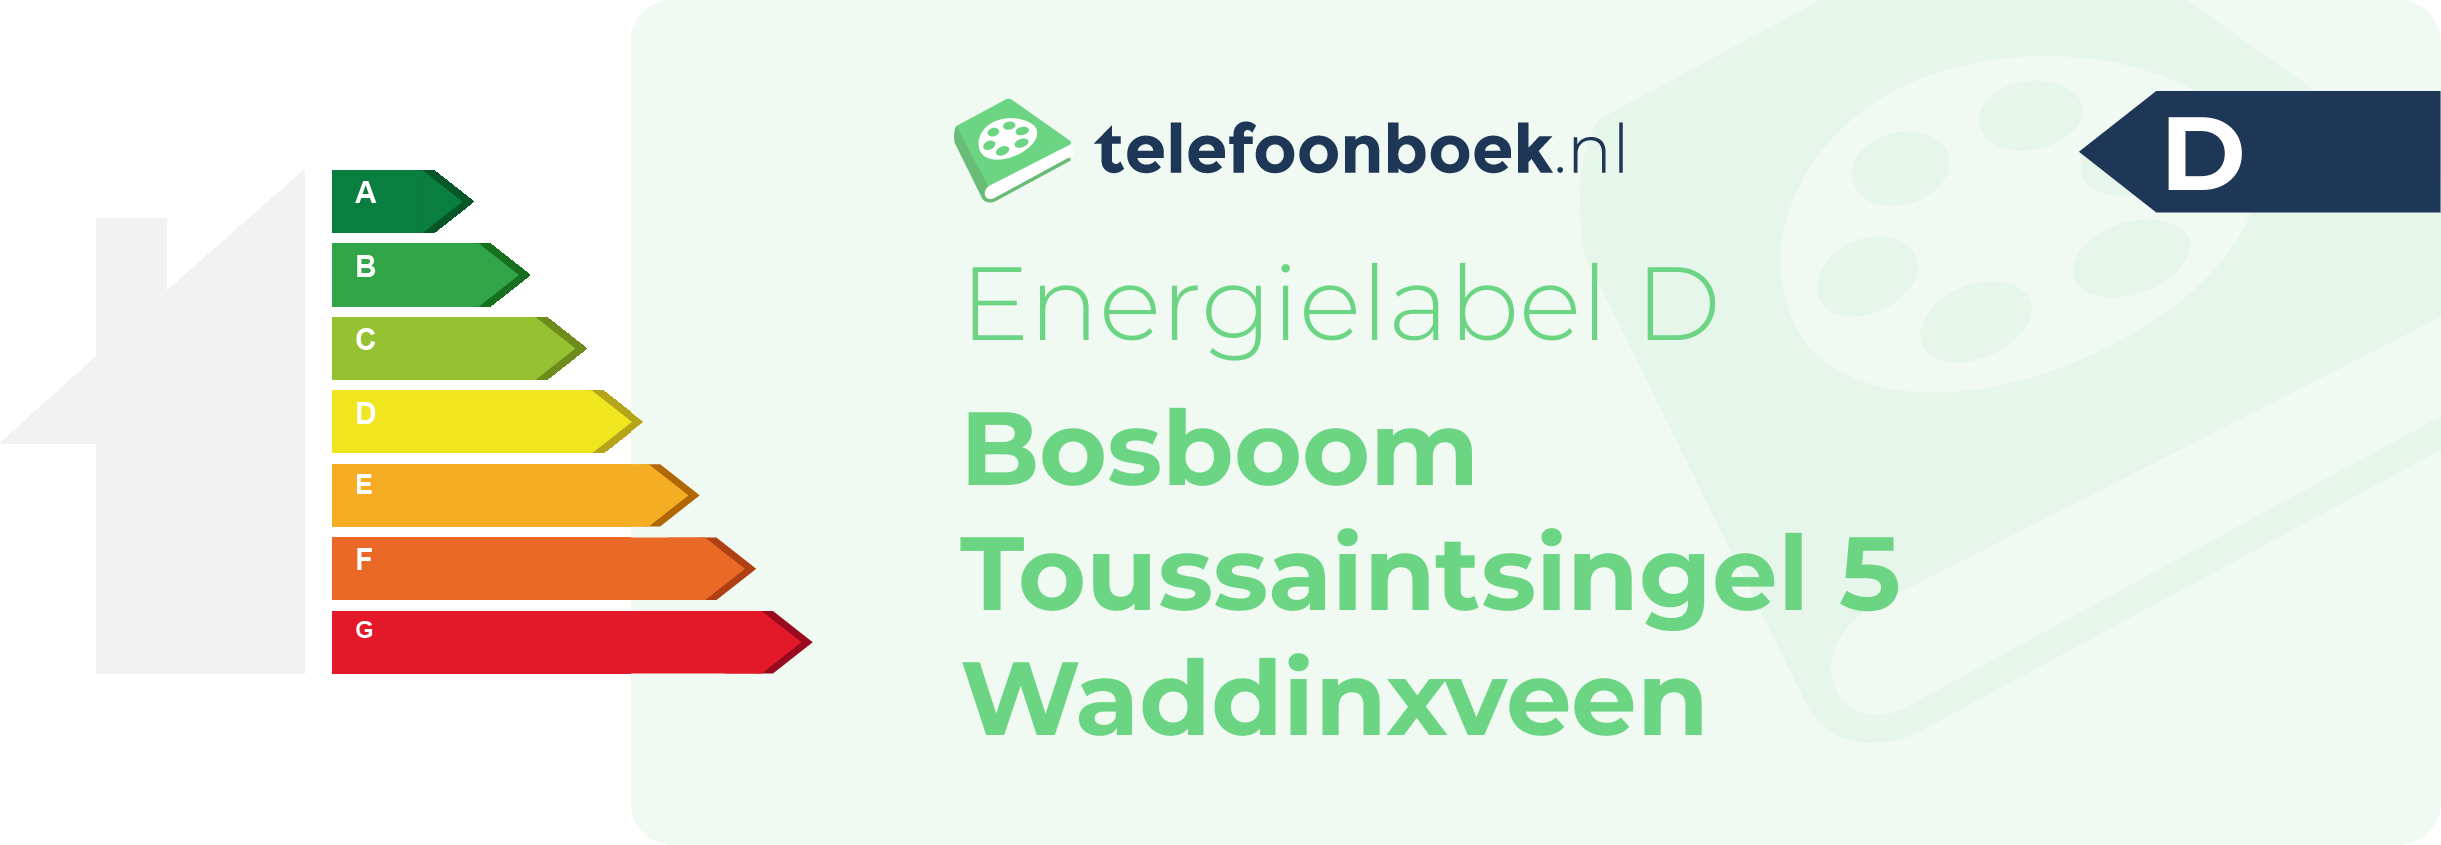 Energielabel Bosboom Toussaintsingel 5 Waddinxveen